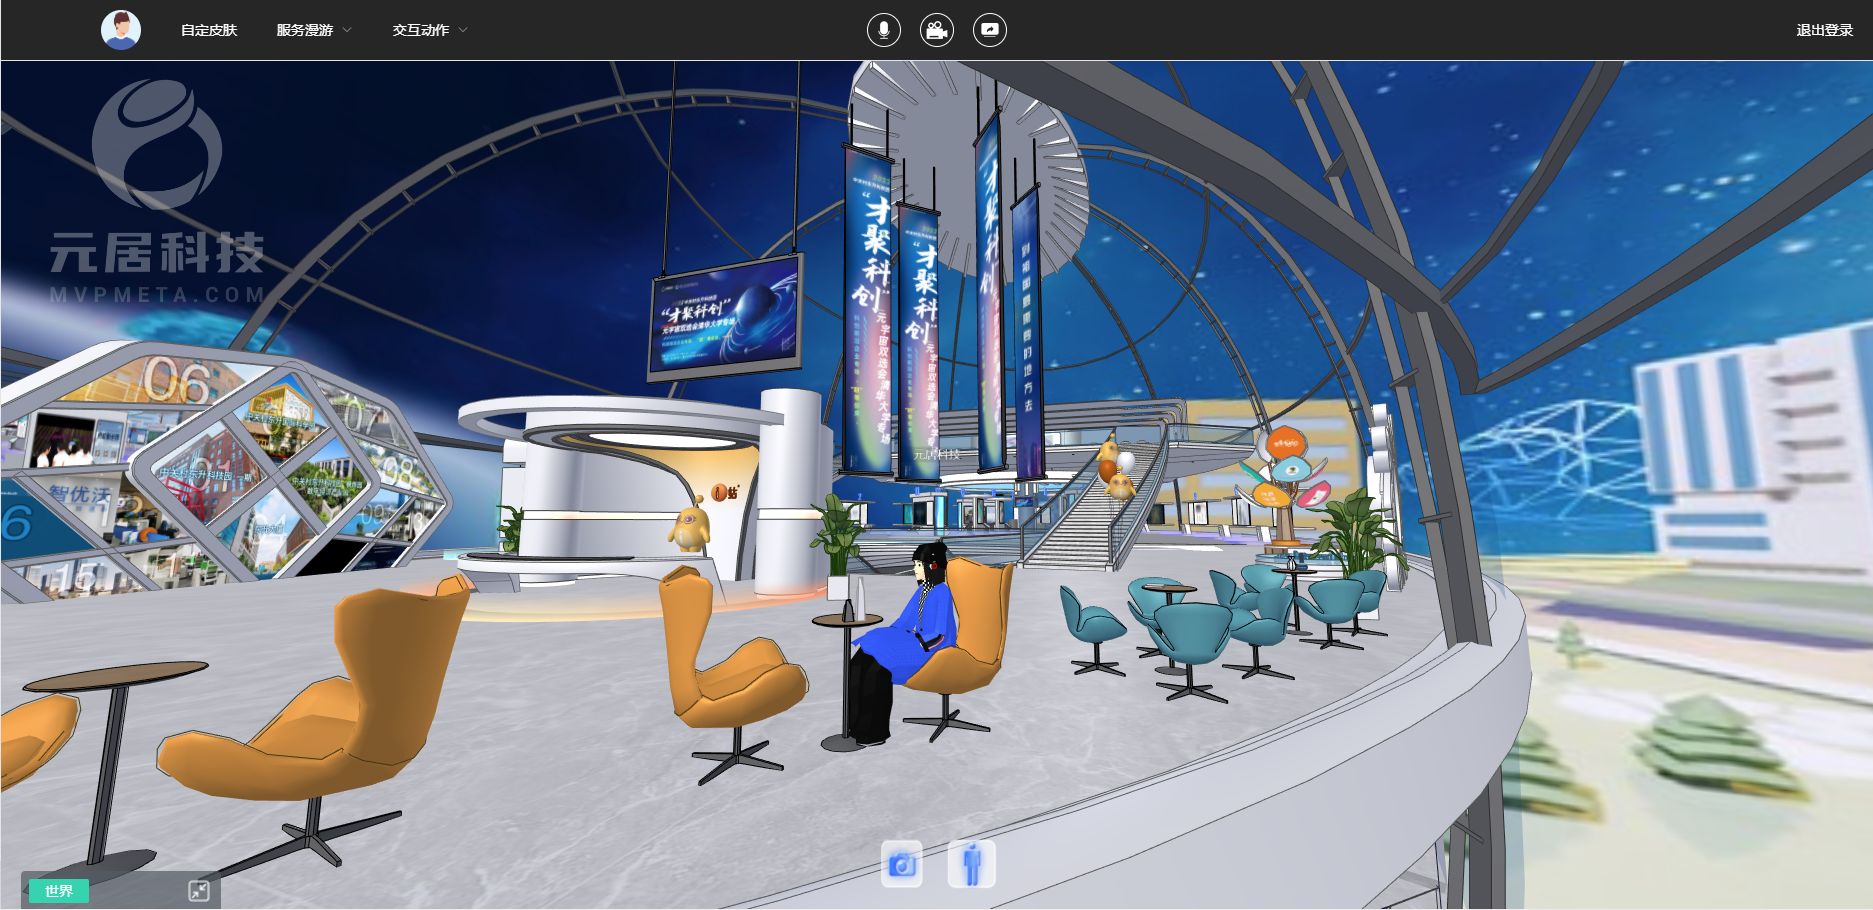 VR在线招聘会在企业与毕业生间搭建沟通新平台